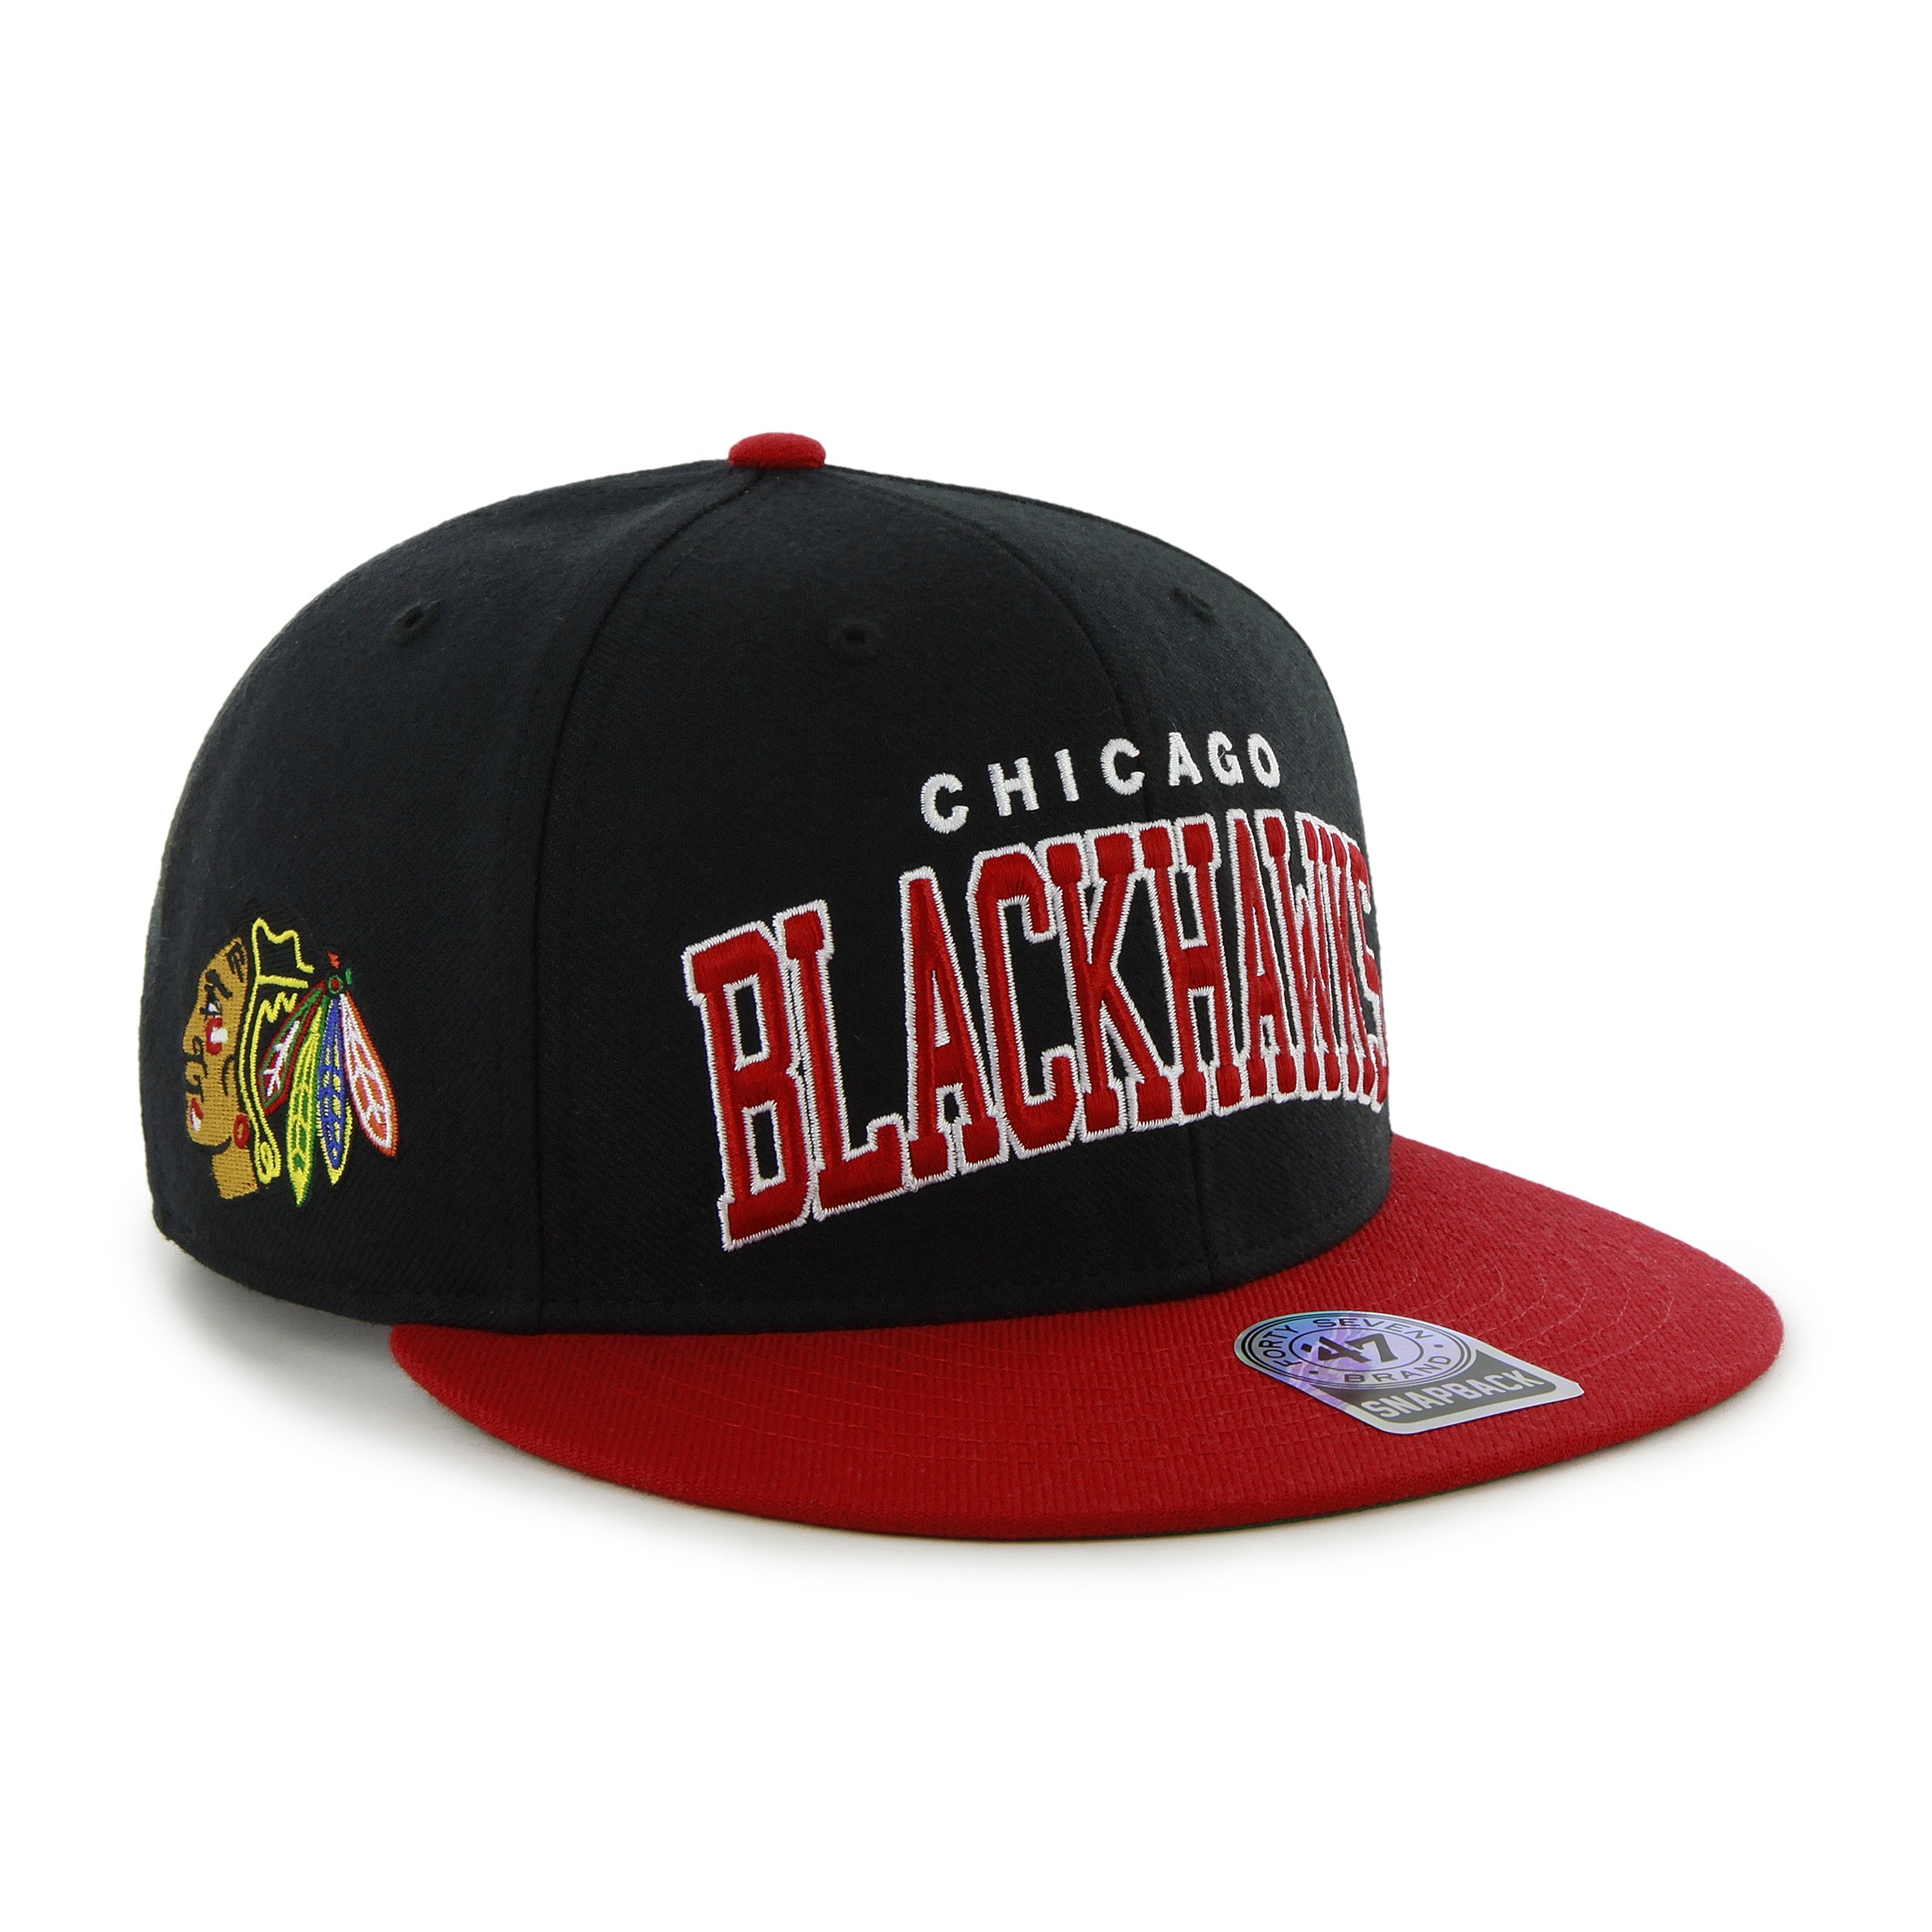 CHICAGO BLACKHAWKS BLOCKSHED '47 CAPTAIN